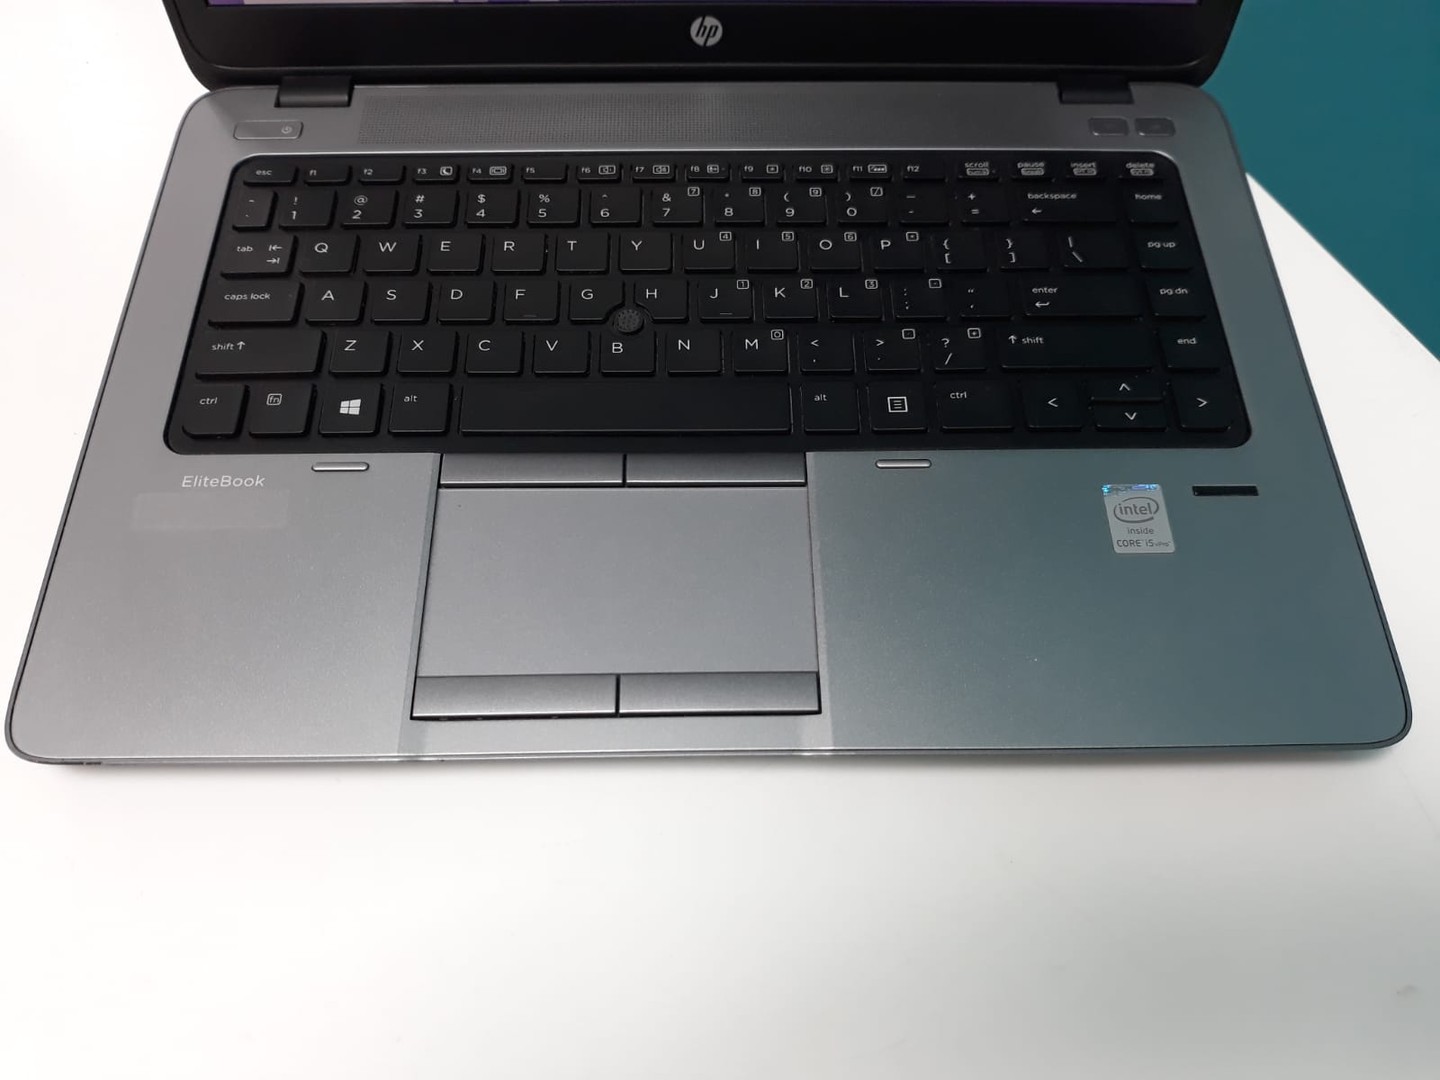 computadoras y laptops - Laptop, HP EliteBook 840 G1 / 4th Gen, Intel Core i5 / 8GB DDR3 / 128GB SSD	


- 3